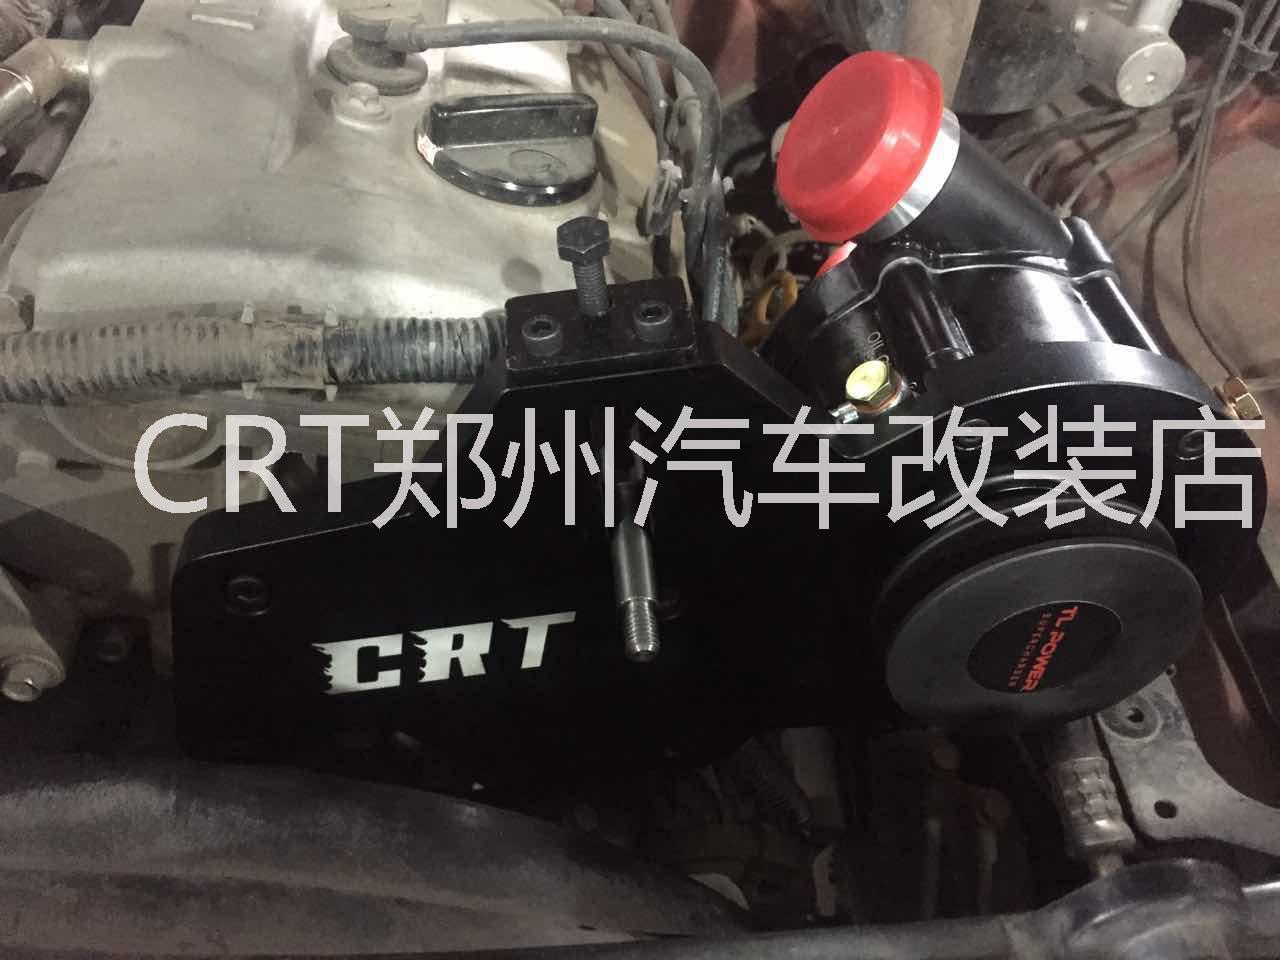 TL机械增压河南郑州CRT汽车改装 河南郑州CRT汽车动力改装